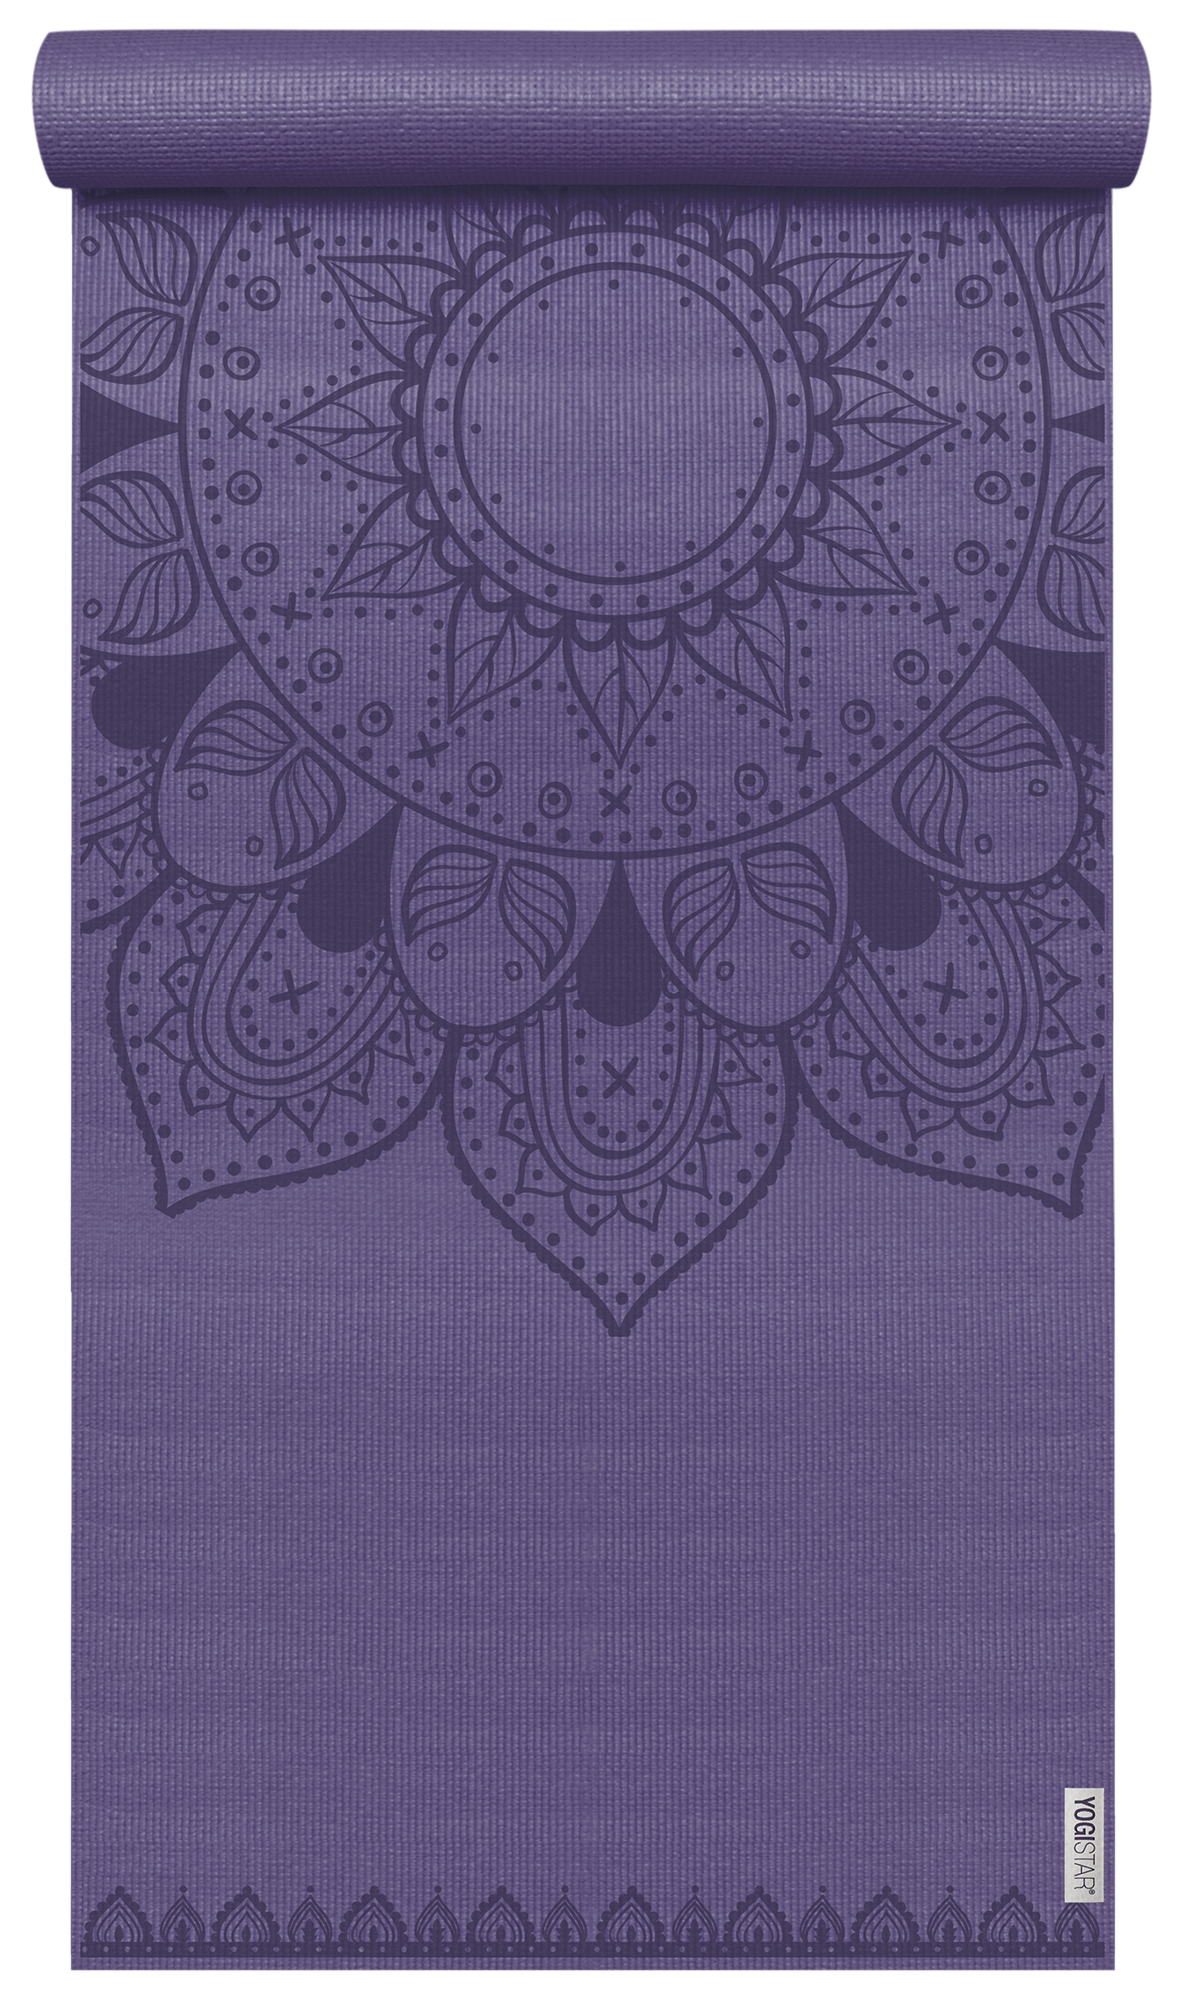 YOGISTAR.COM | Yogamatte yogimat® basic - art collection - harmonic mandala  | Yoga-Zubehör, Yogamatten und Yoga